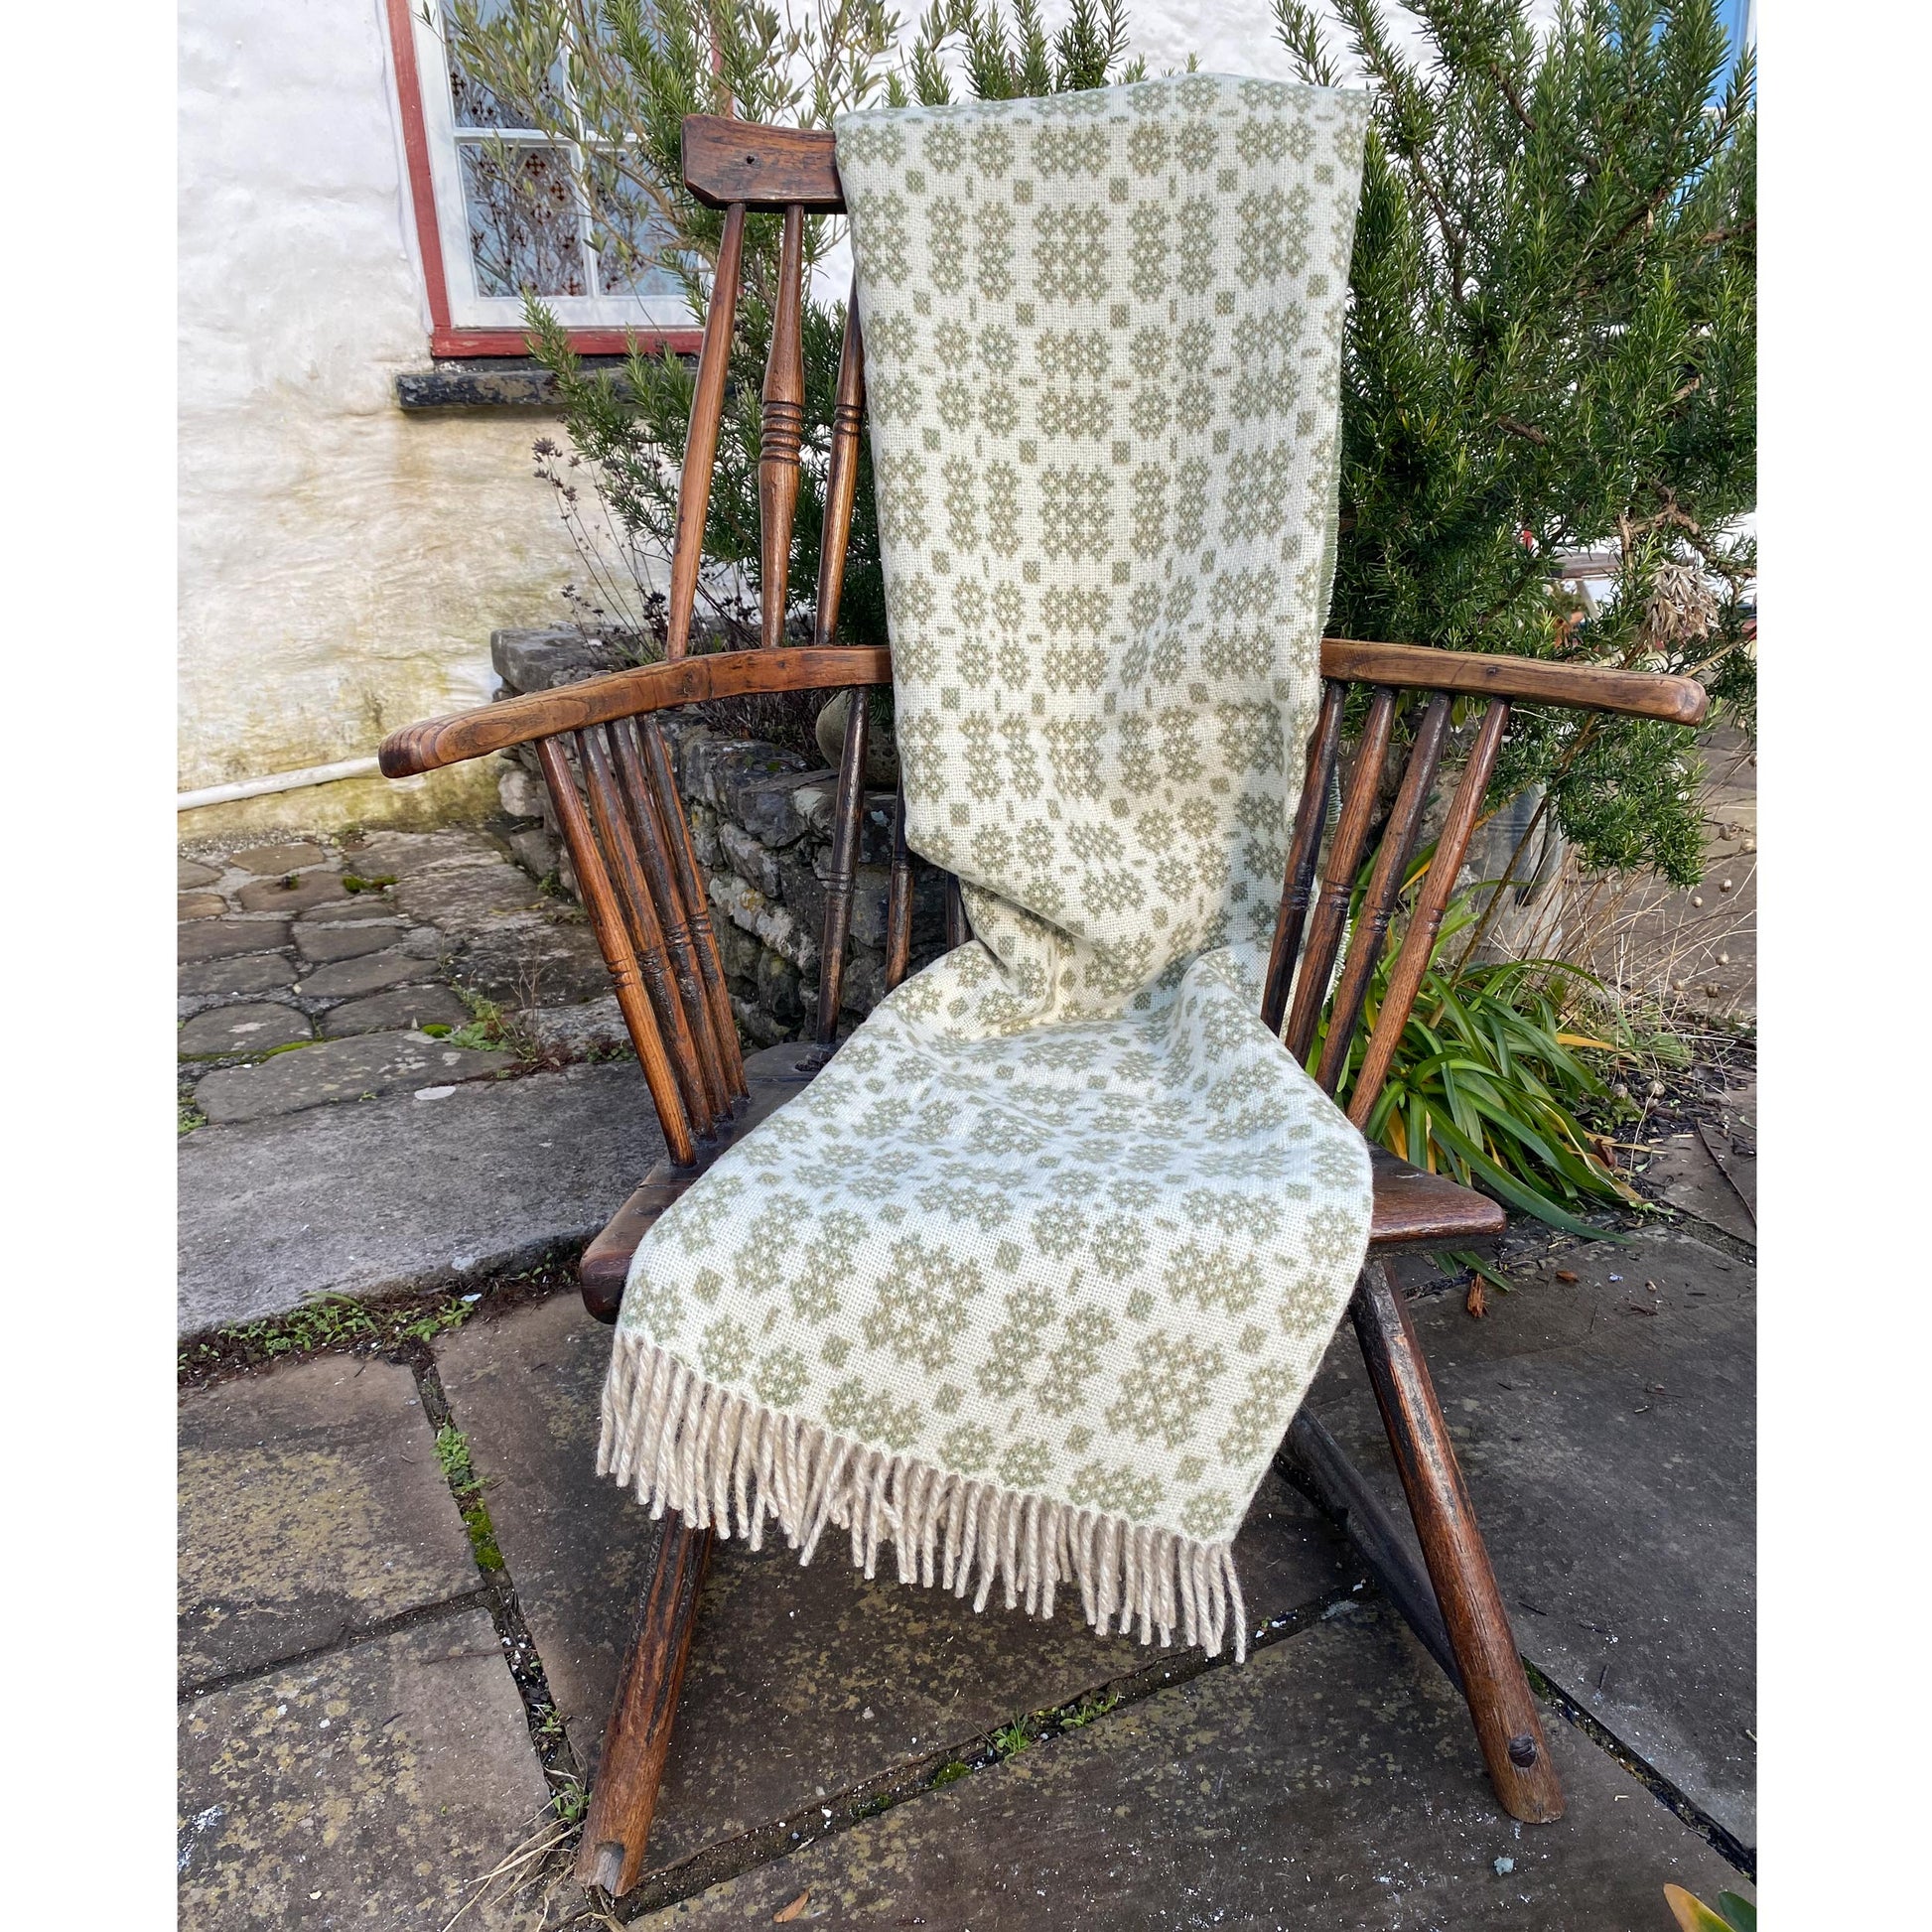 Throw / Blanket - Welsh Tapestry / Carthen Ysgafn - Caernarfon - 100% Wool - Sage